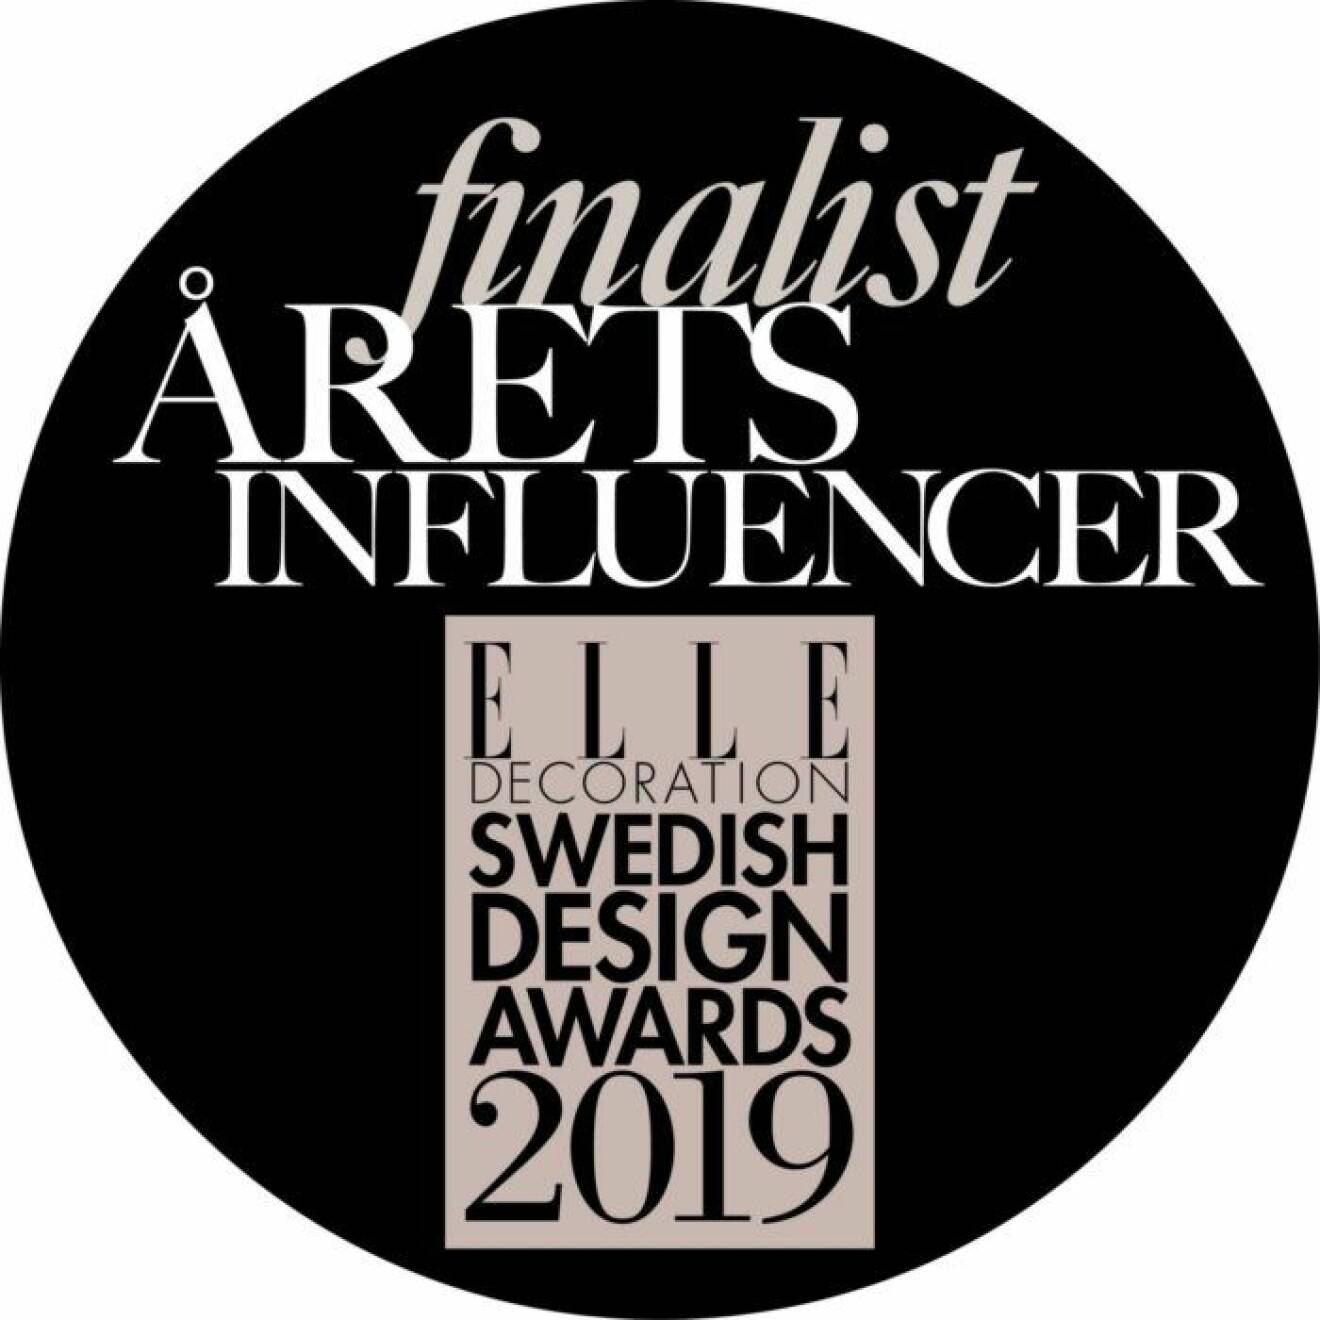 Årets influencer 2019 – finalisterna.